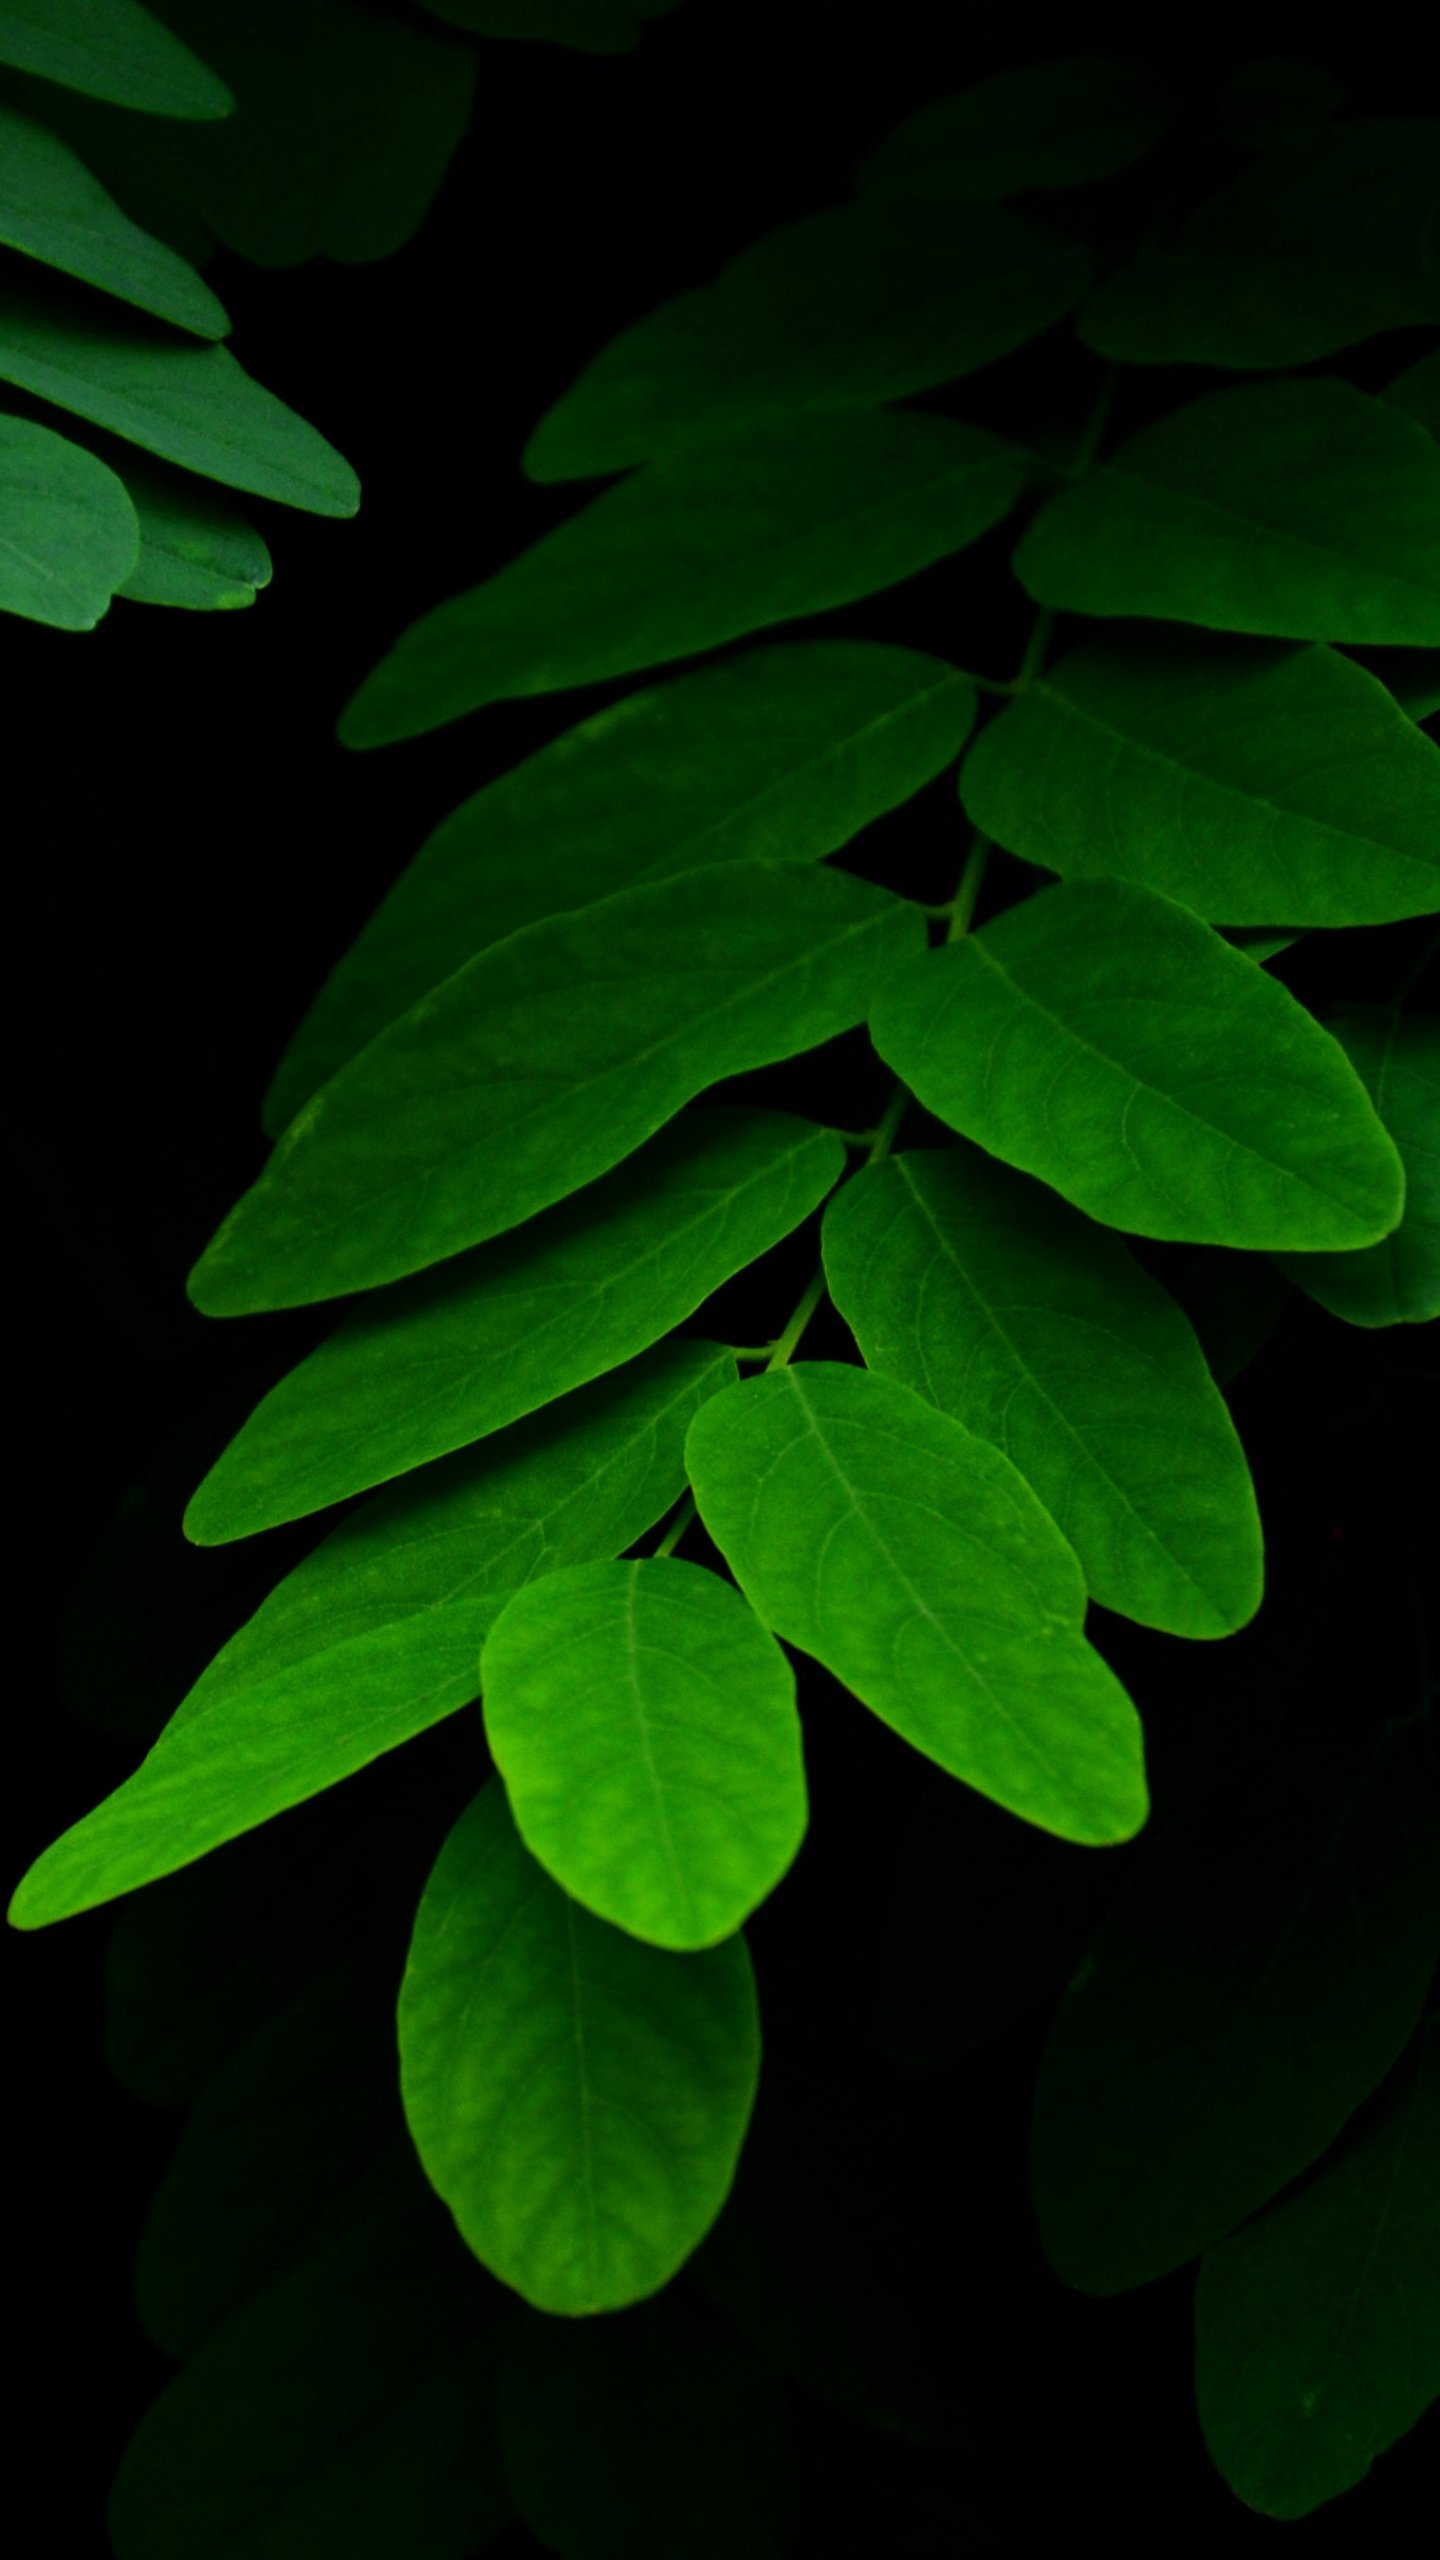 Leaves On Black Background Wallpaper Iphone Android Desktop